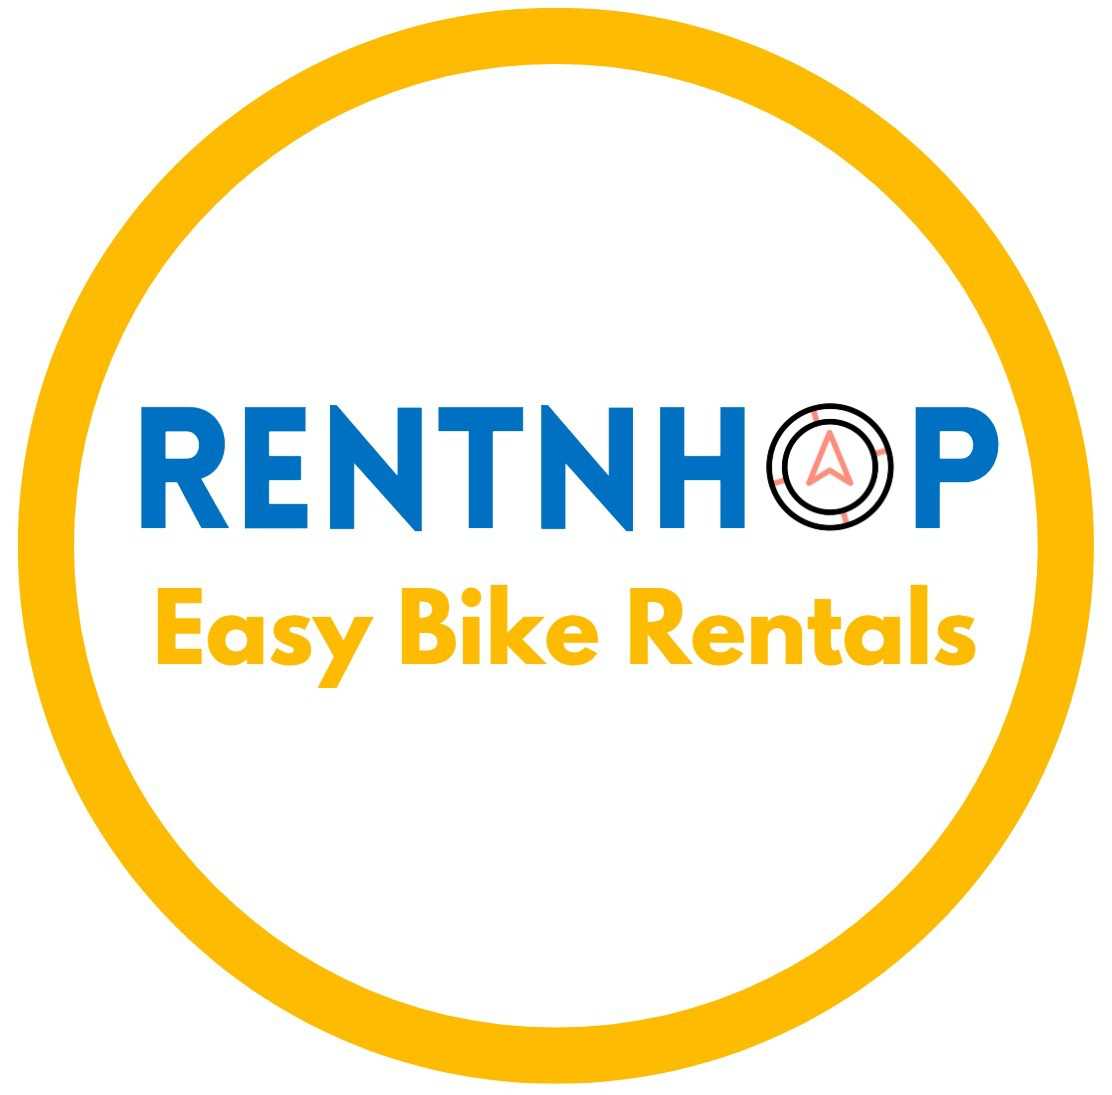 RentnHop EasyBikeRentals Profile Picture